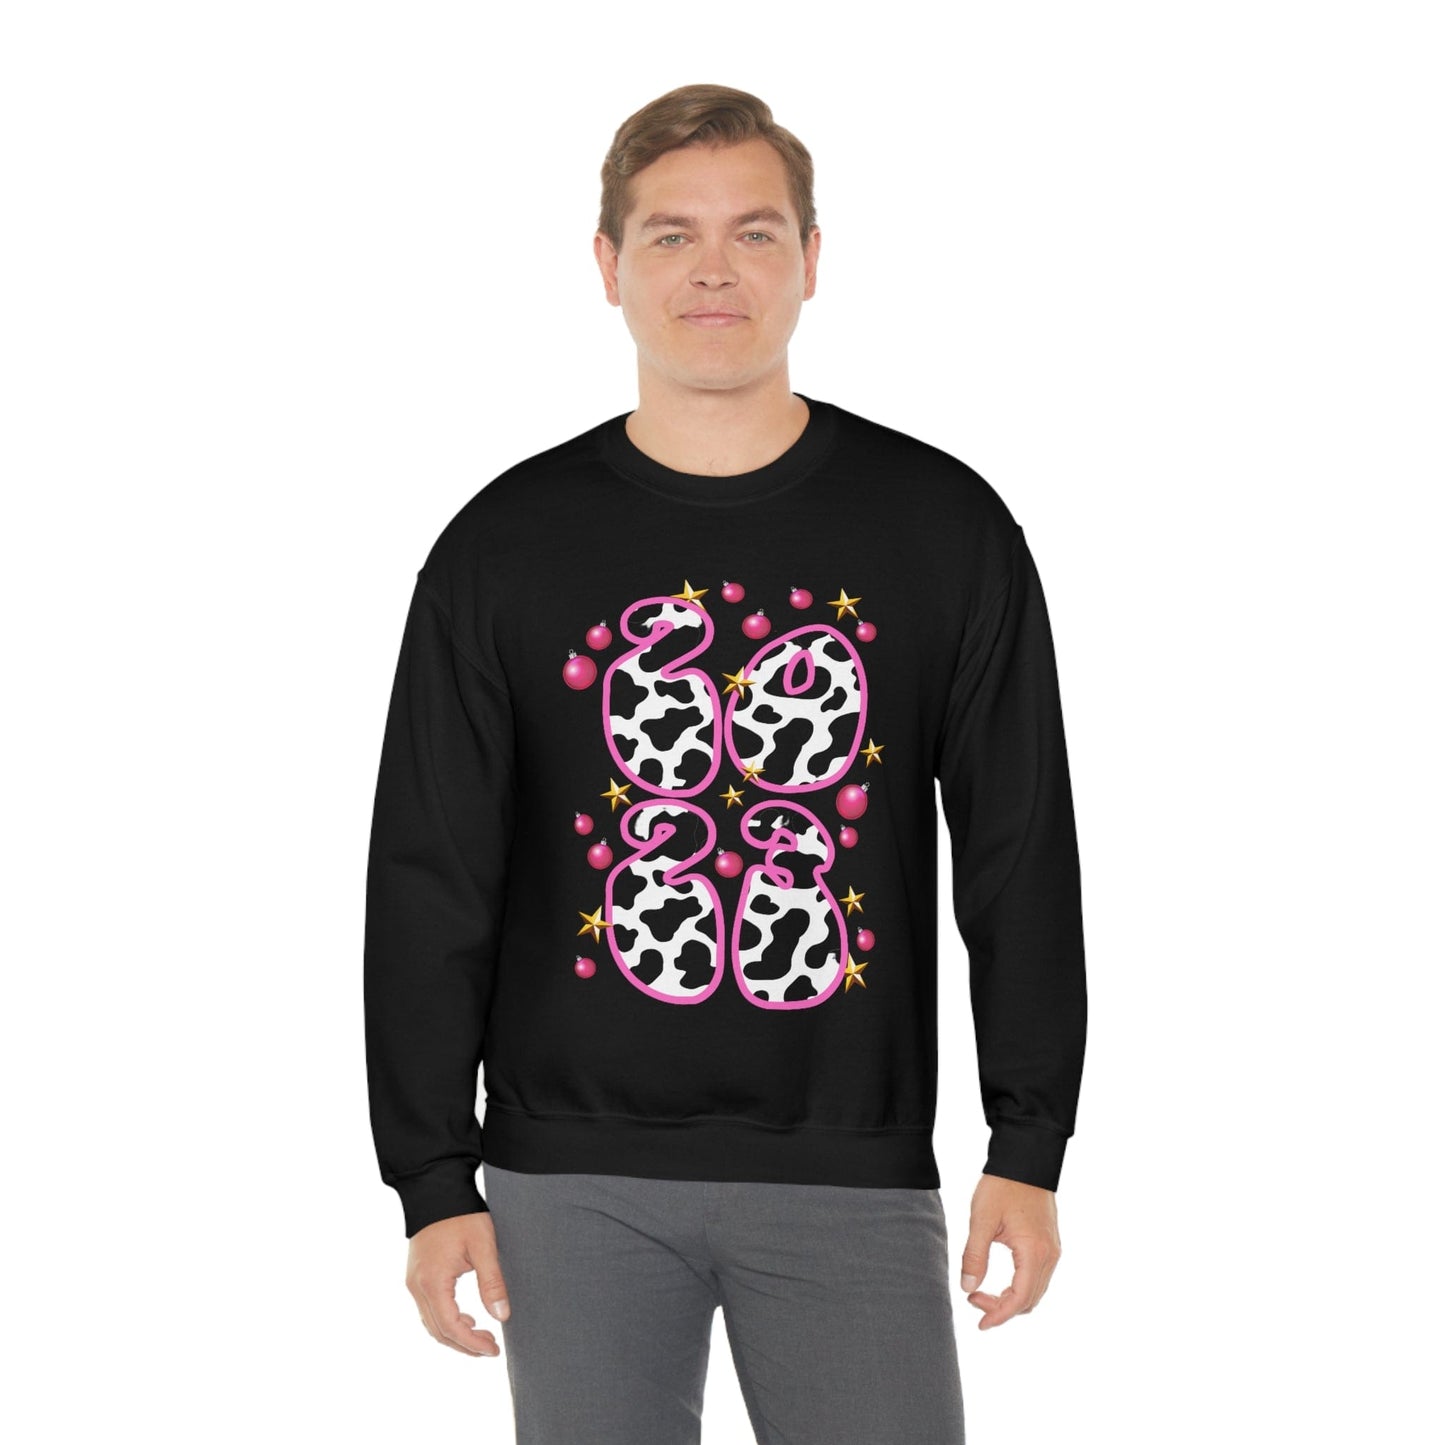 2023 Pink Cow Print Men Sweatshirt, New Year's Eve 2023 Sweatshirt for Men, Retro New Year Sweater, Western Cow Print Sweatshirt